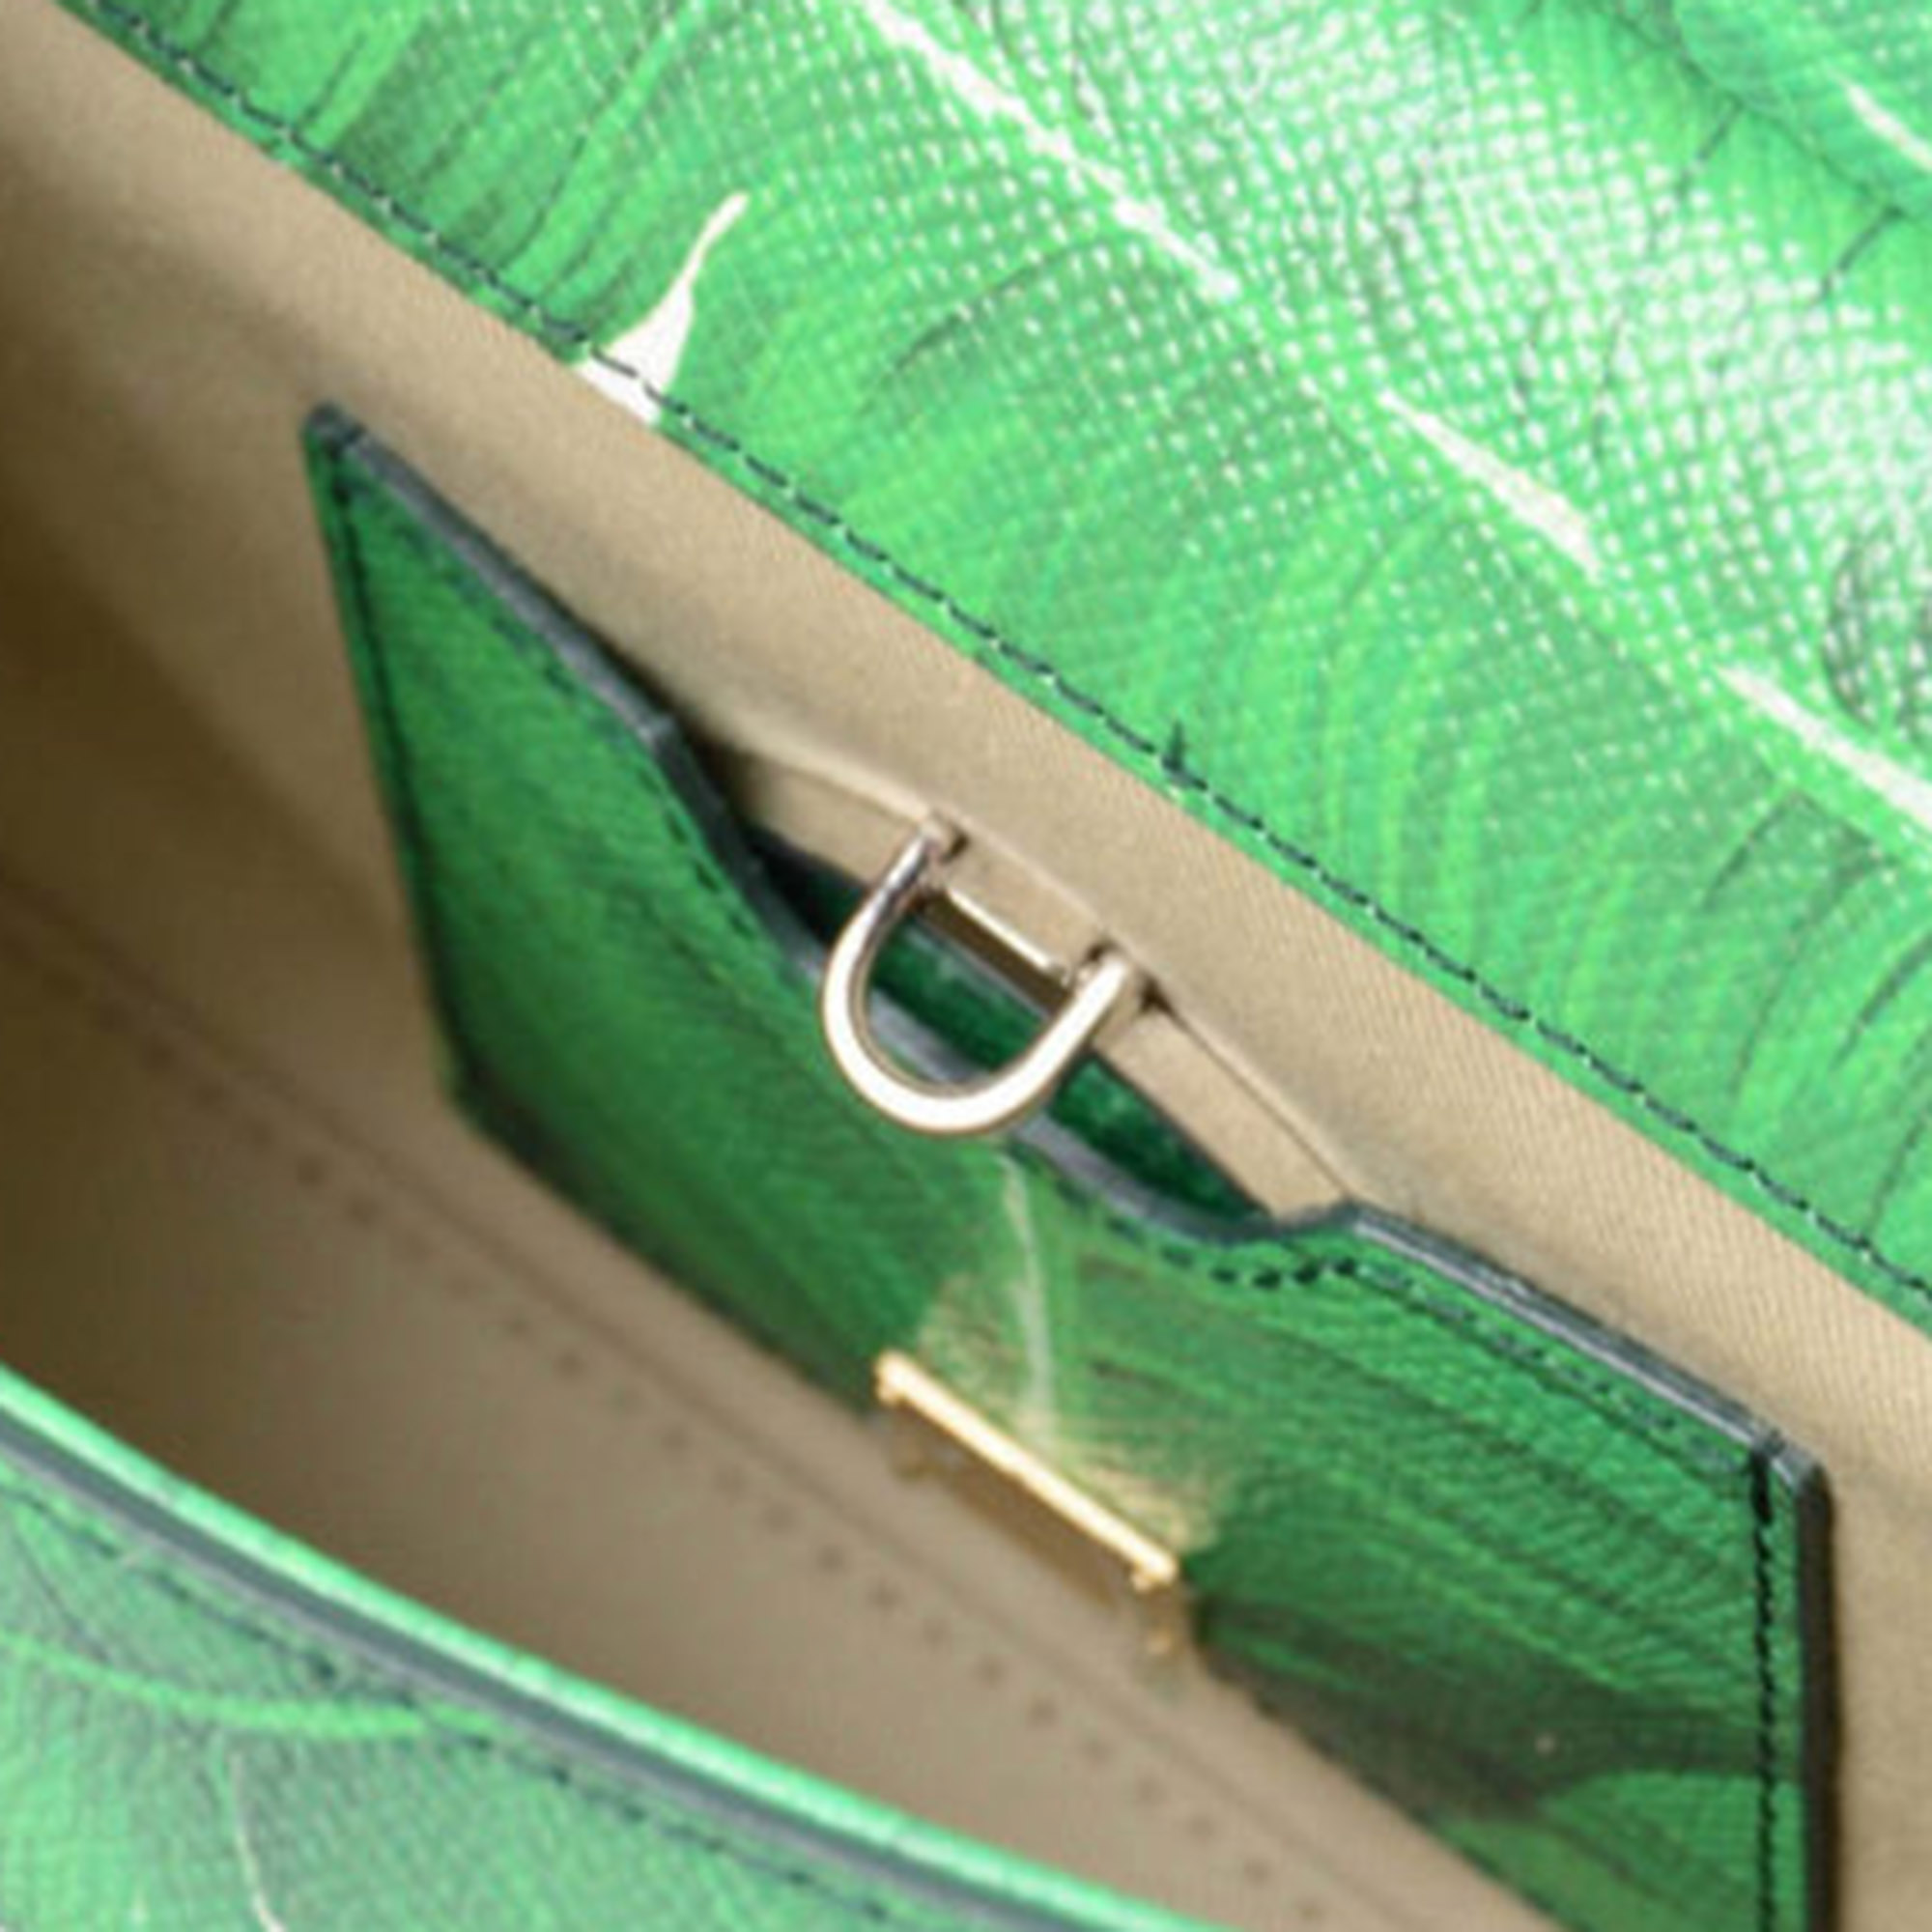 Dolce & Gabbana Green Banana Leaf Print Leather Small Miss Sicily Top Handle Bag